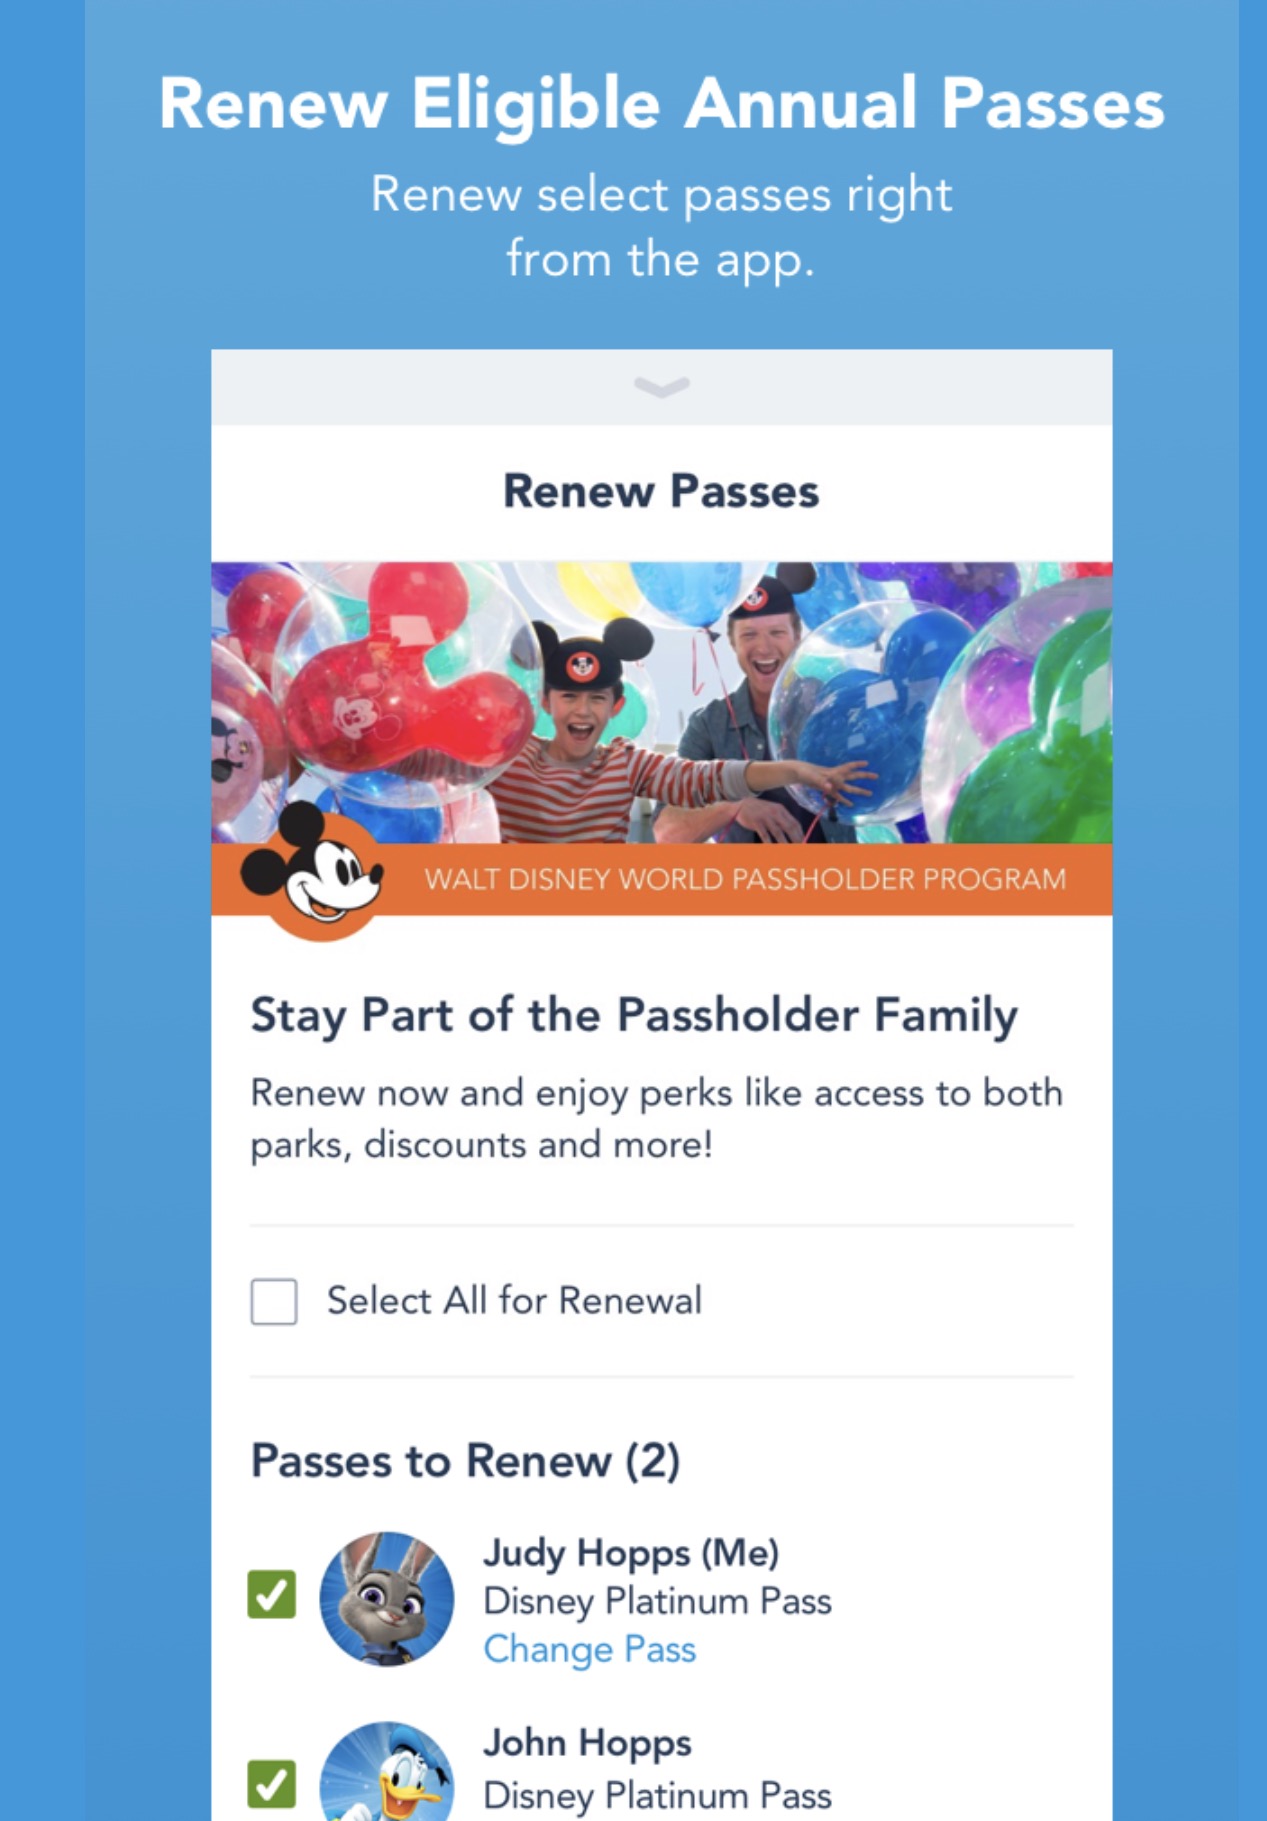 Three New My Disney Experience App Updates